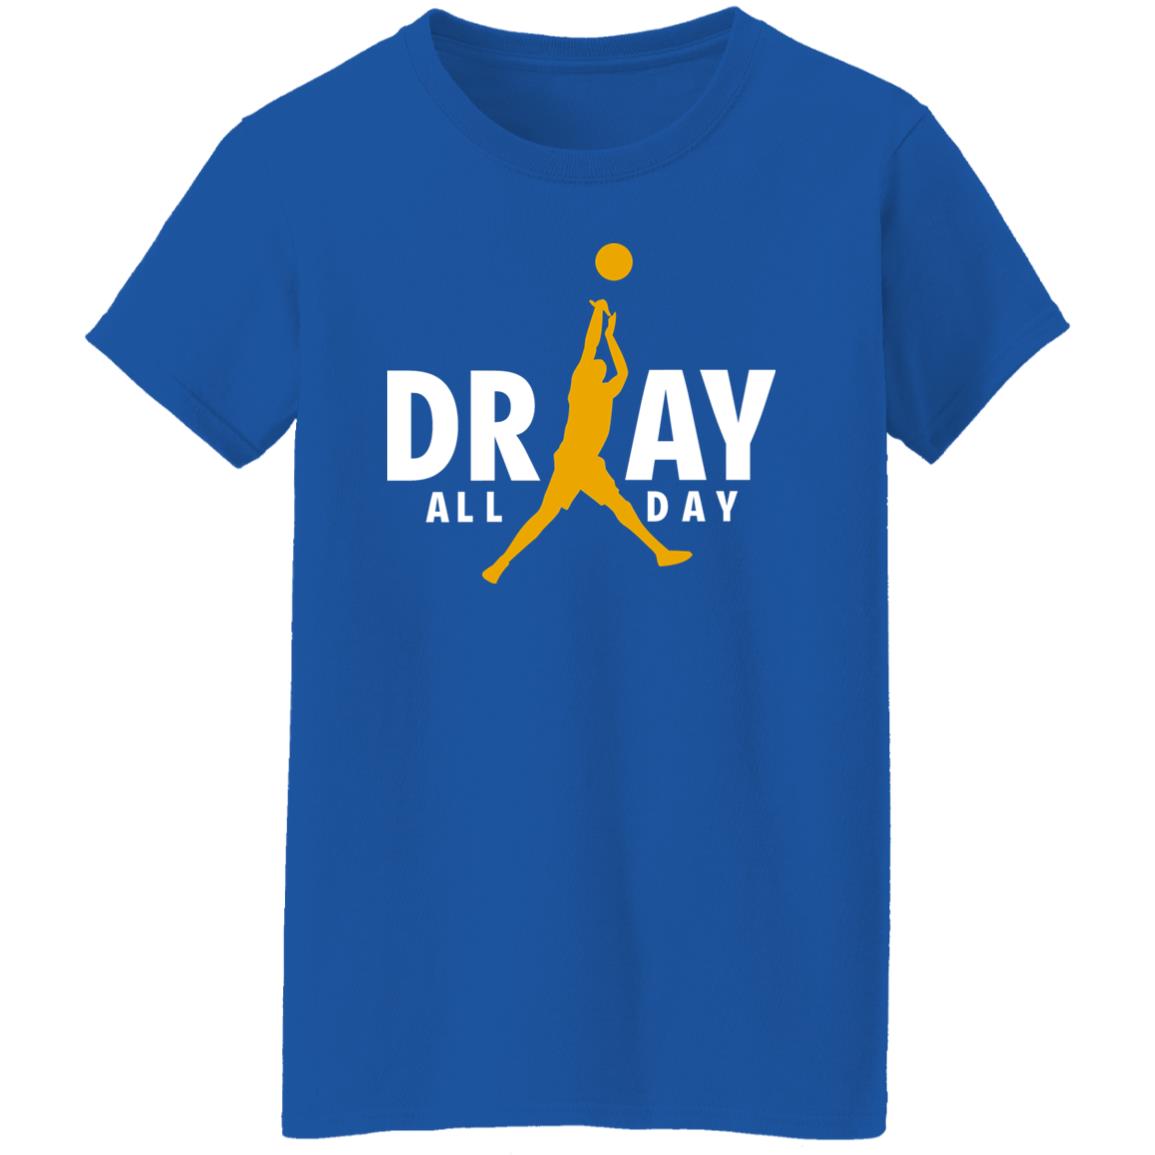 Dray All Day Shirt Draymond Green All Day Shirt Warriors